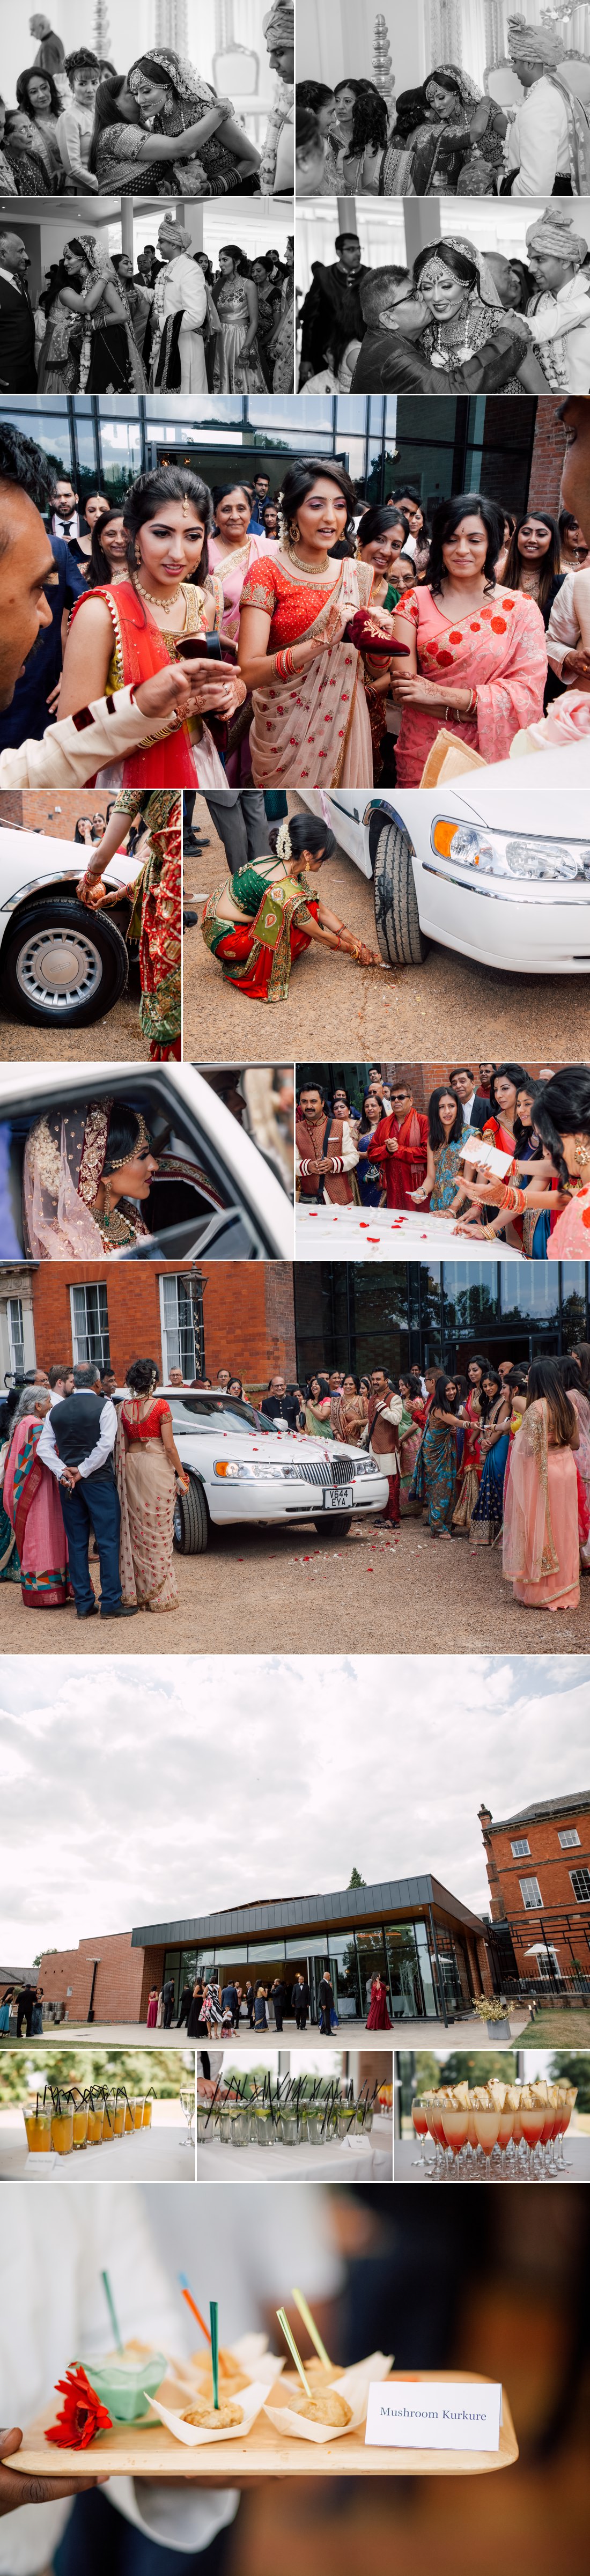 winstanley house - indian wedding photo 9